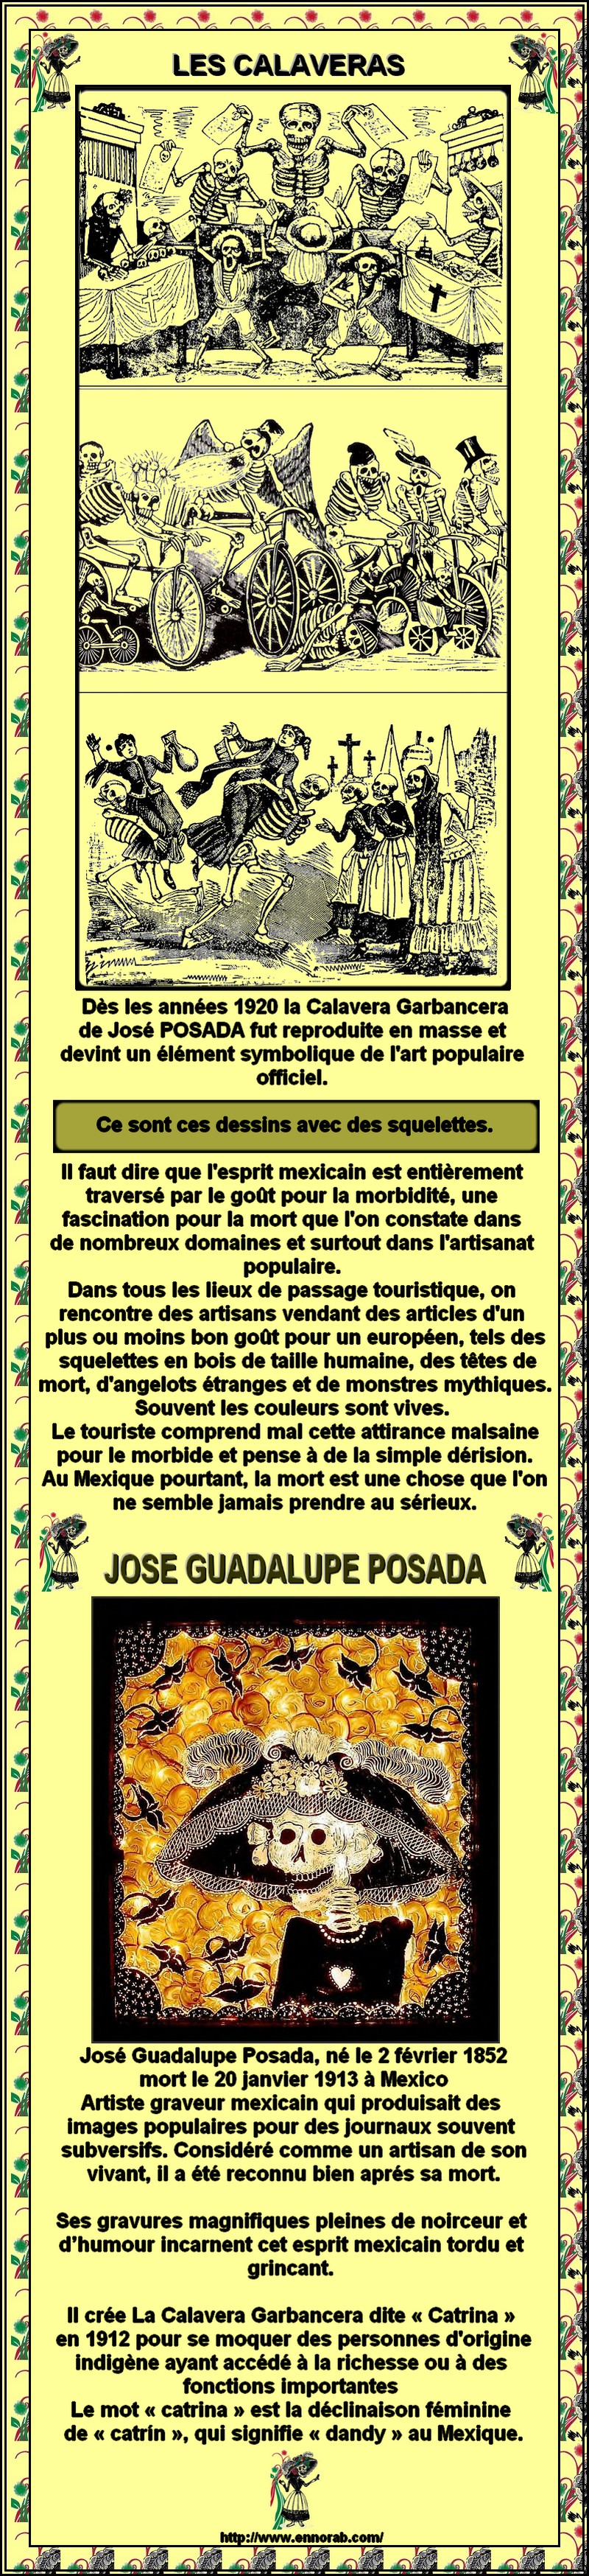 MEXIQUE - JOSE GUADALUPE POSADA - LES CALAVERAS ELEMENT SYMBOLIQUE DE L'ART POPULAIRE -  1203010458251457979517828